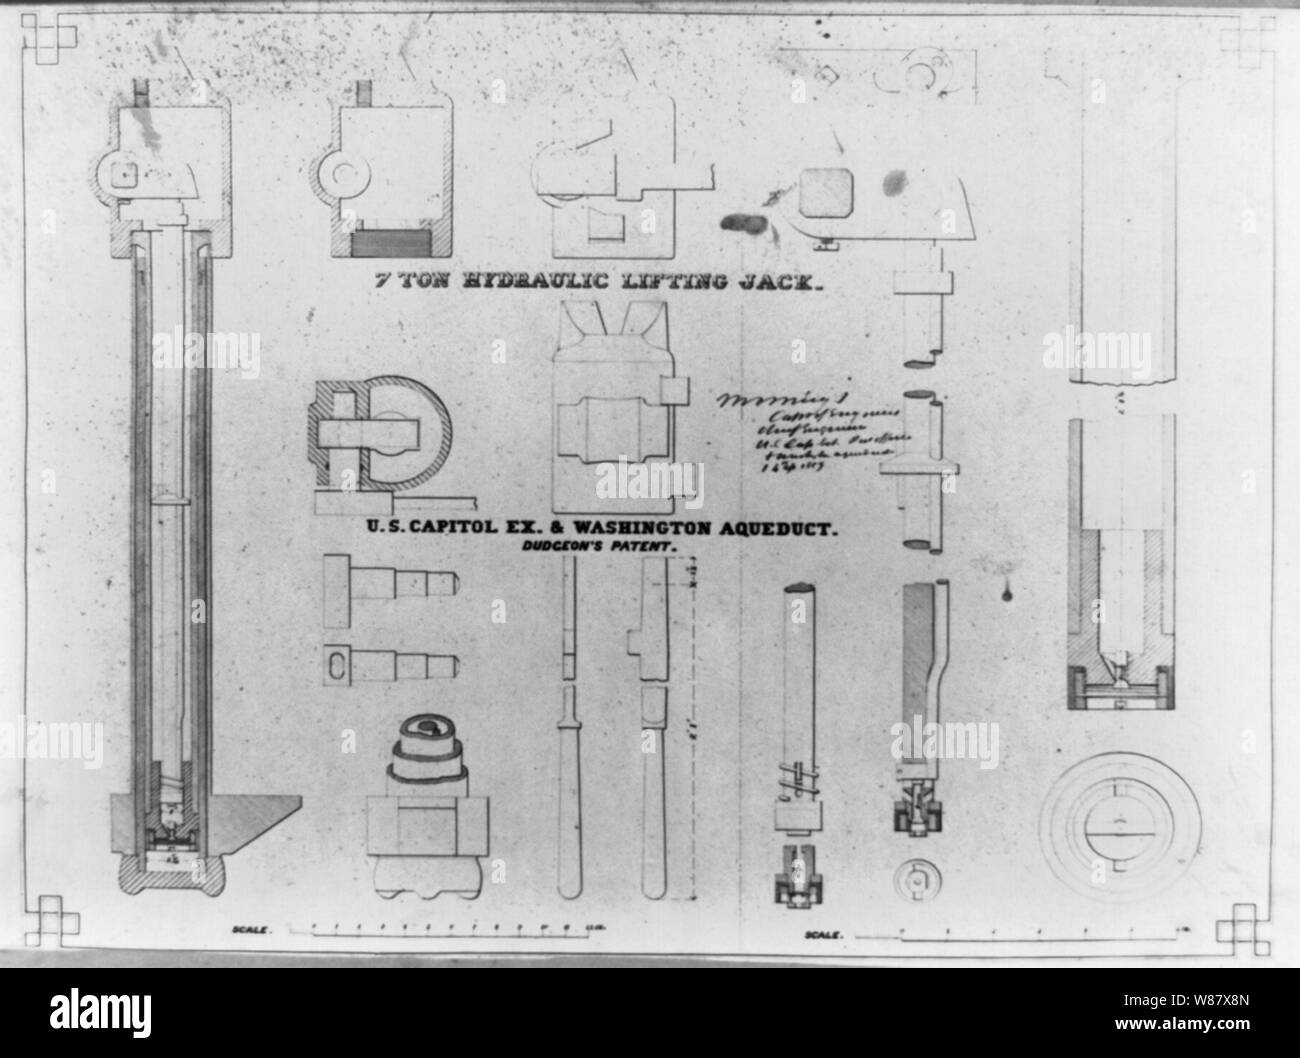 7 ton hydraulic lifting jack, U.S. Capitol Ex. and Washington Aqueduct, Dudgeon's patent Stock Photo